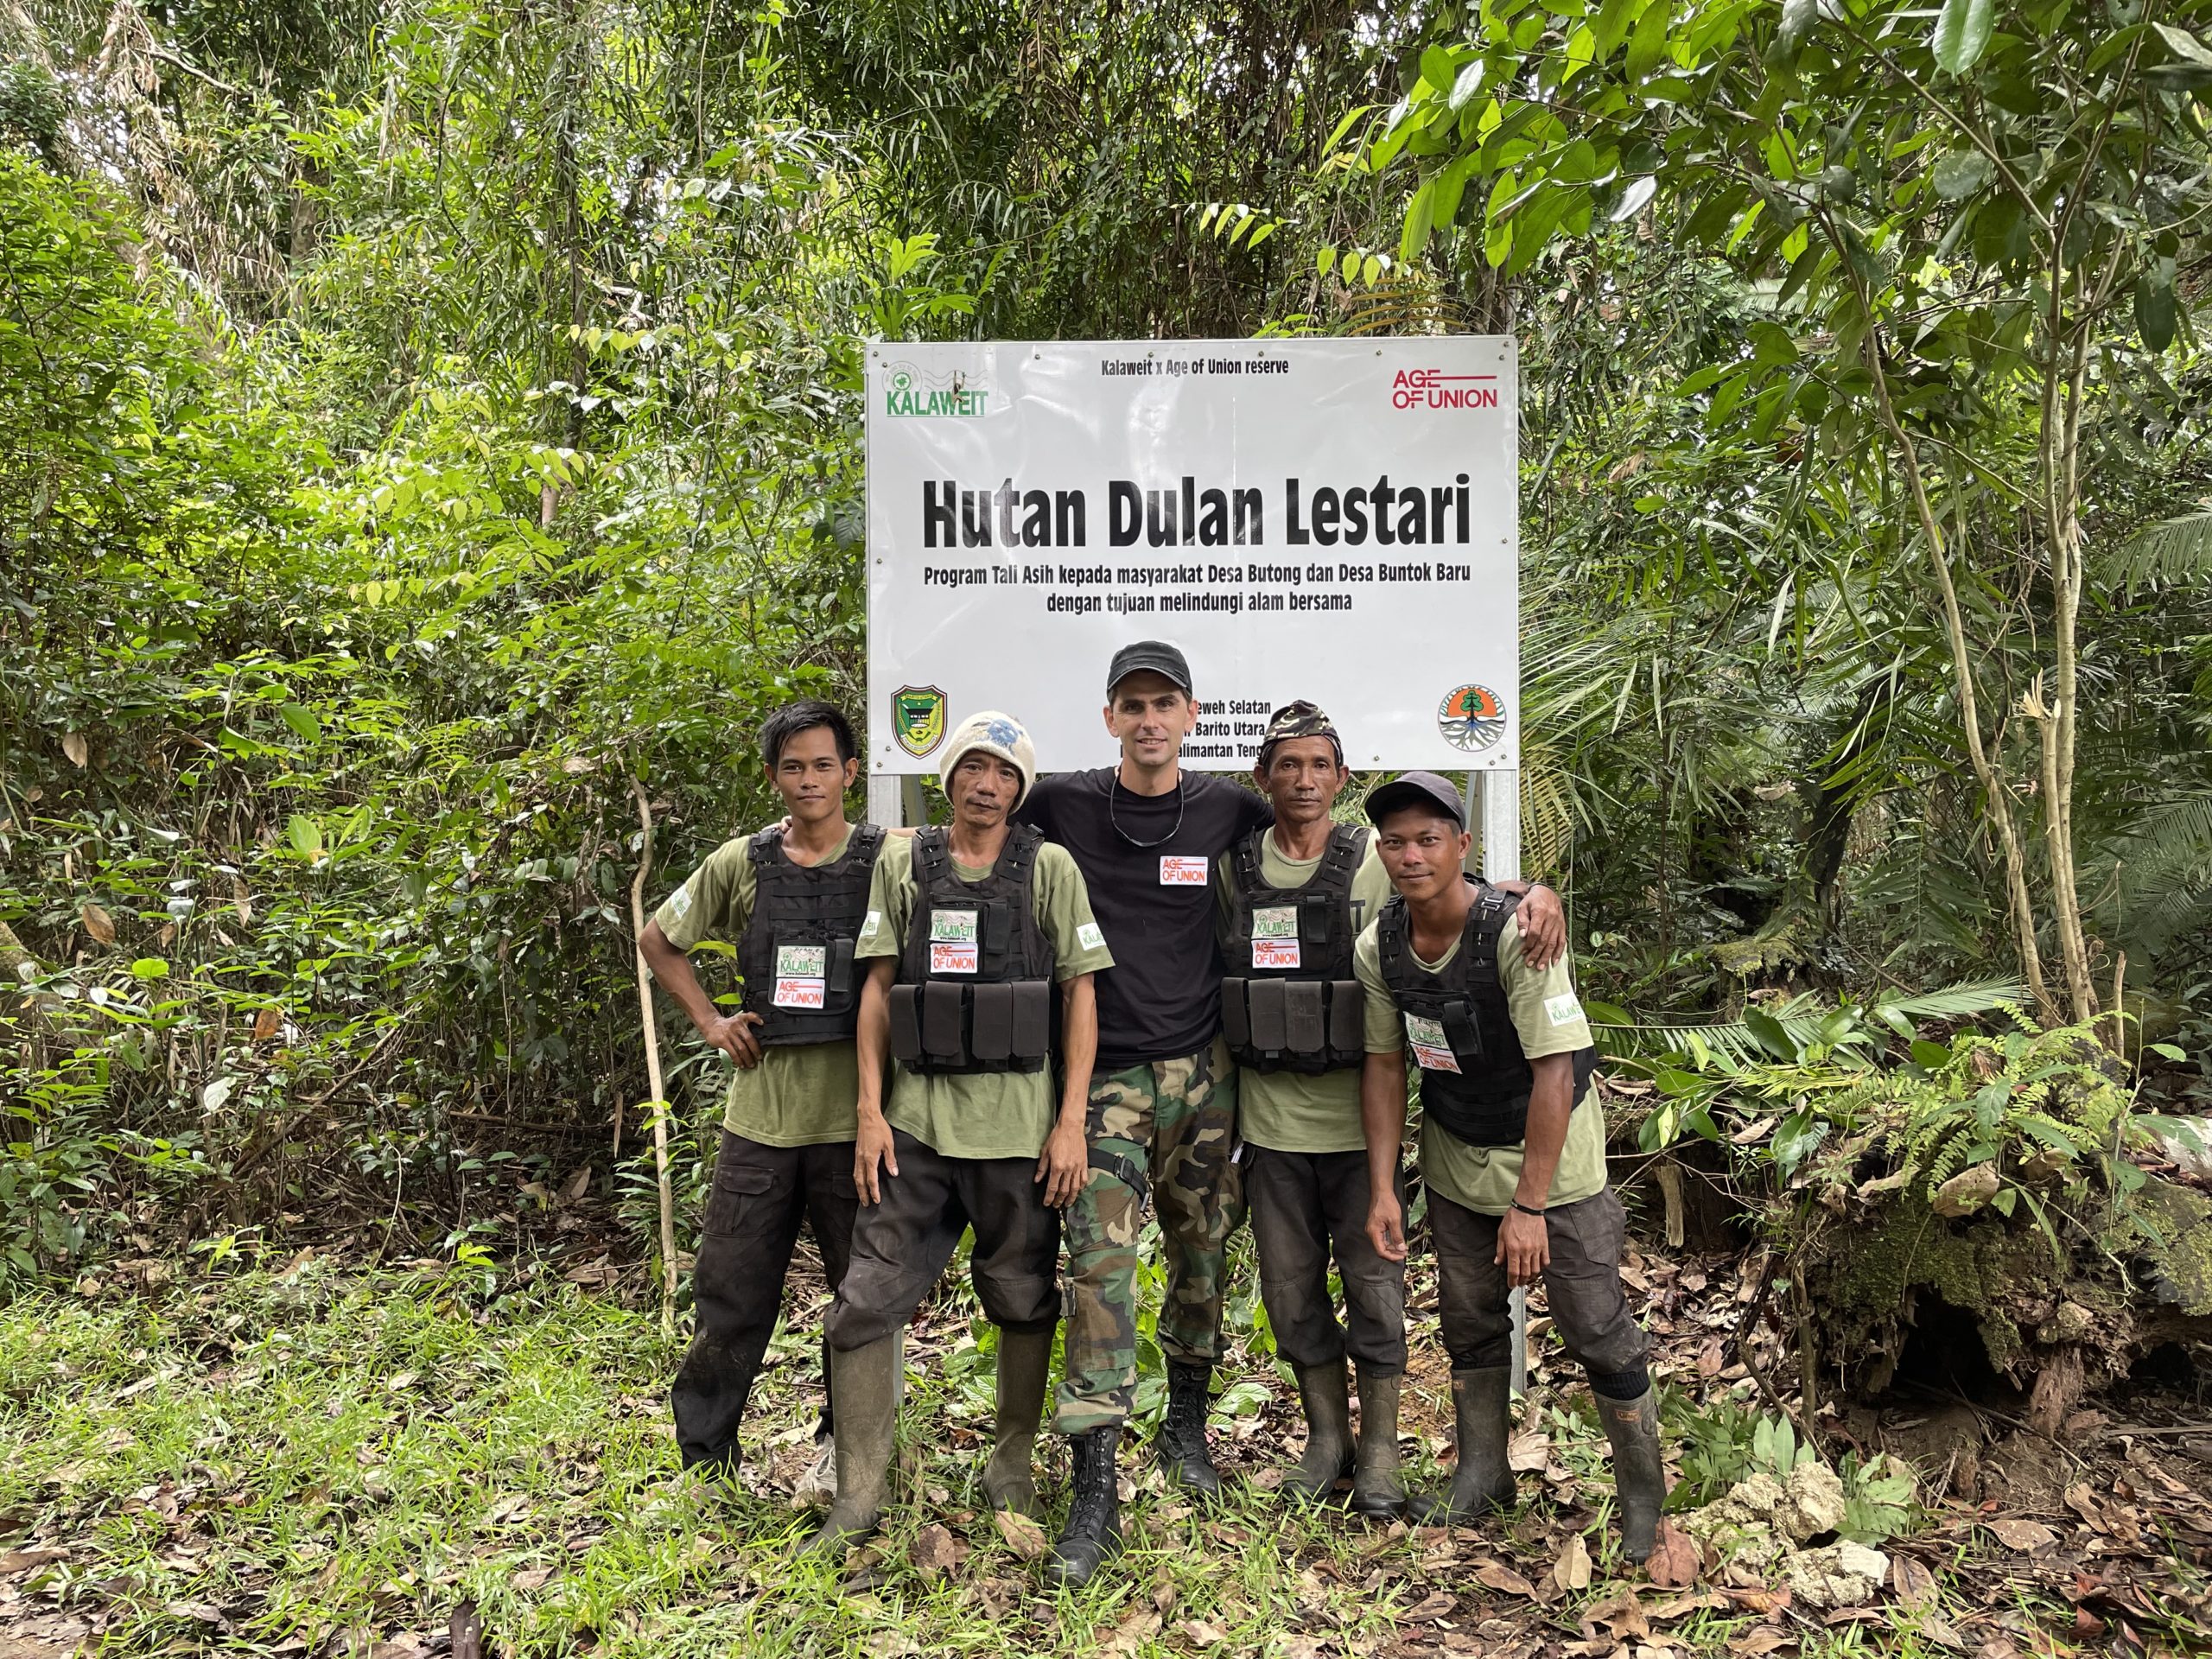 Dulan forest; dax dasilva; deforestation indonesiaage of union